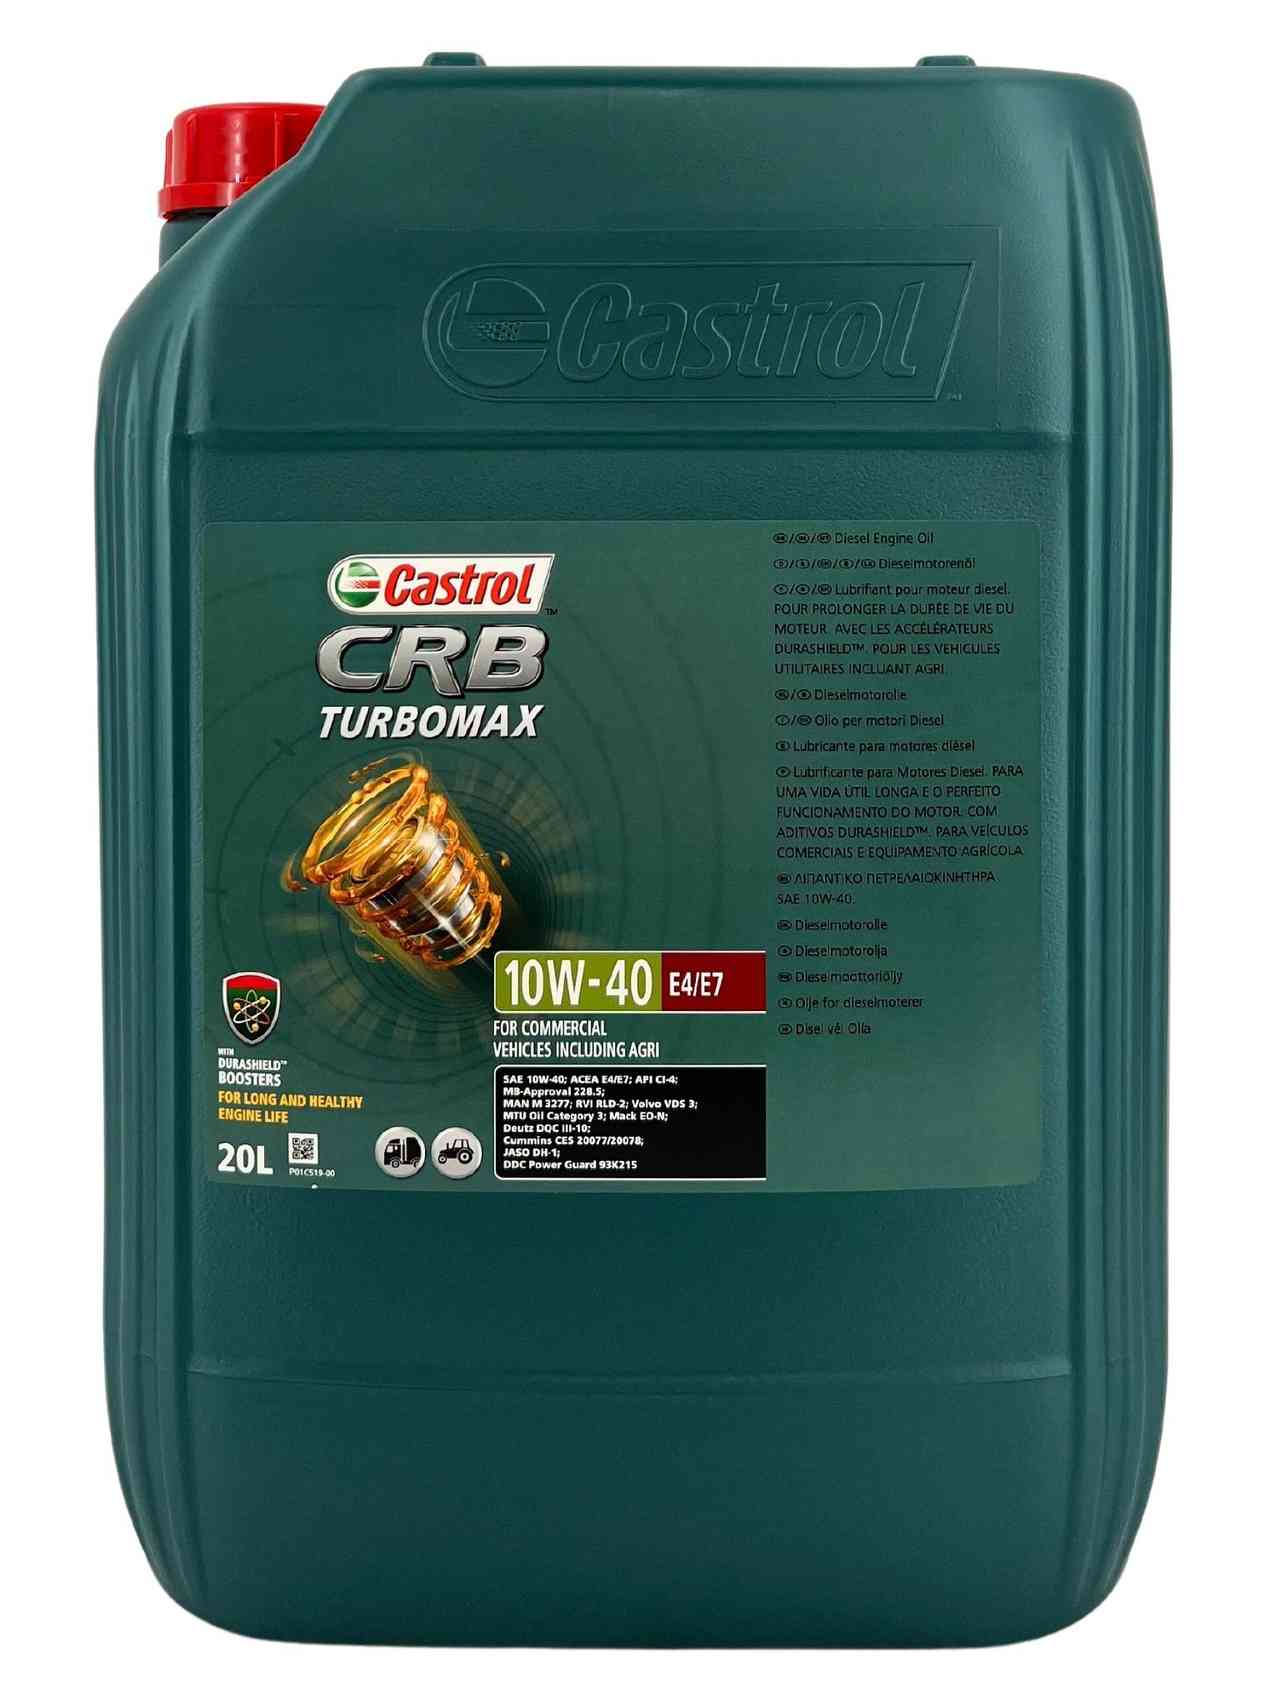 Castrol CRB Turbomax 10W-40 E4/E7 20 Liter